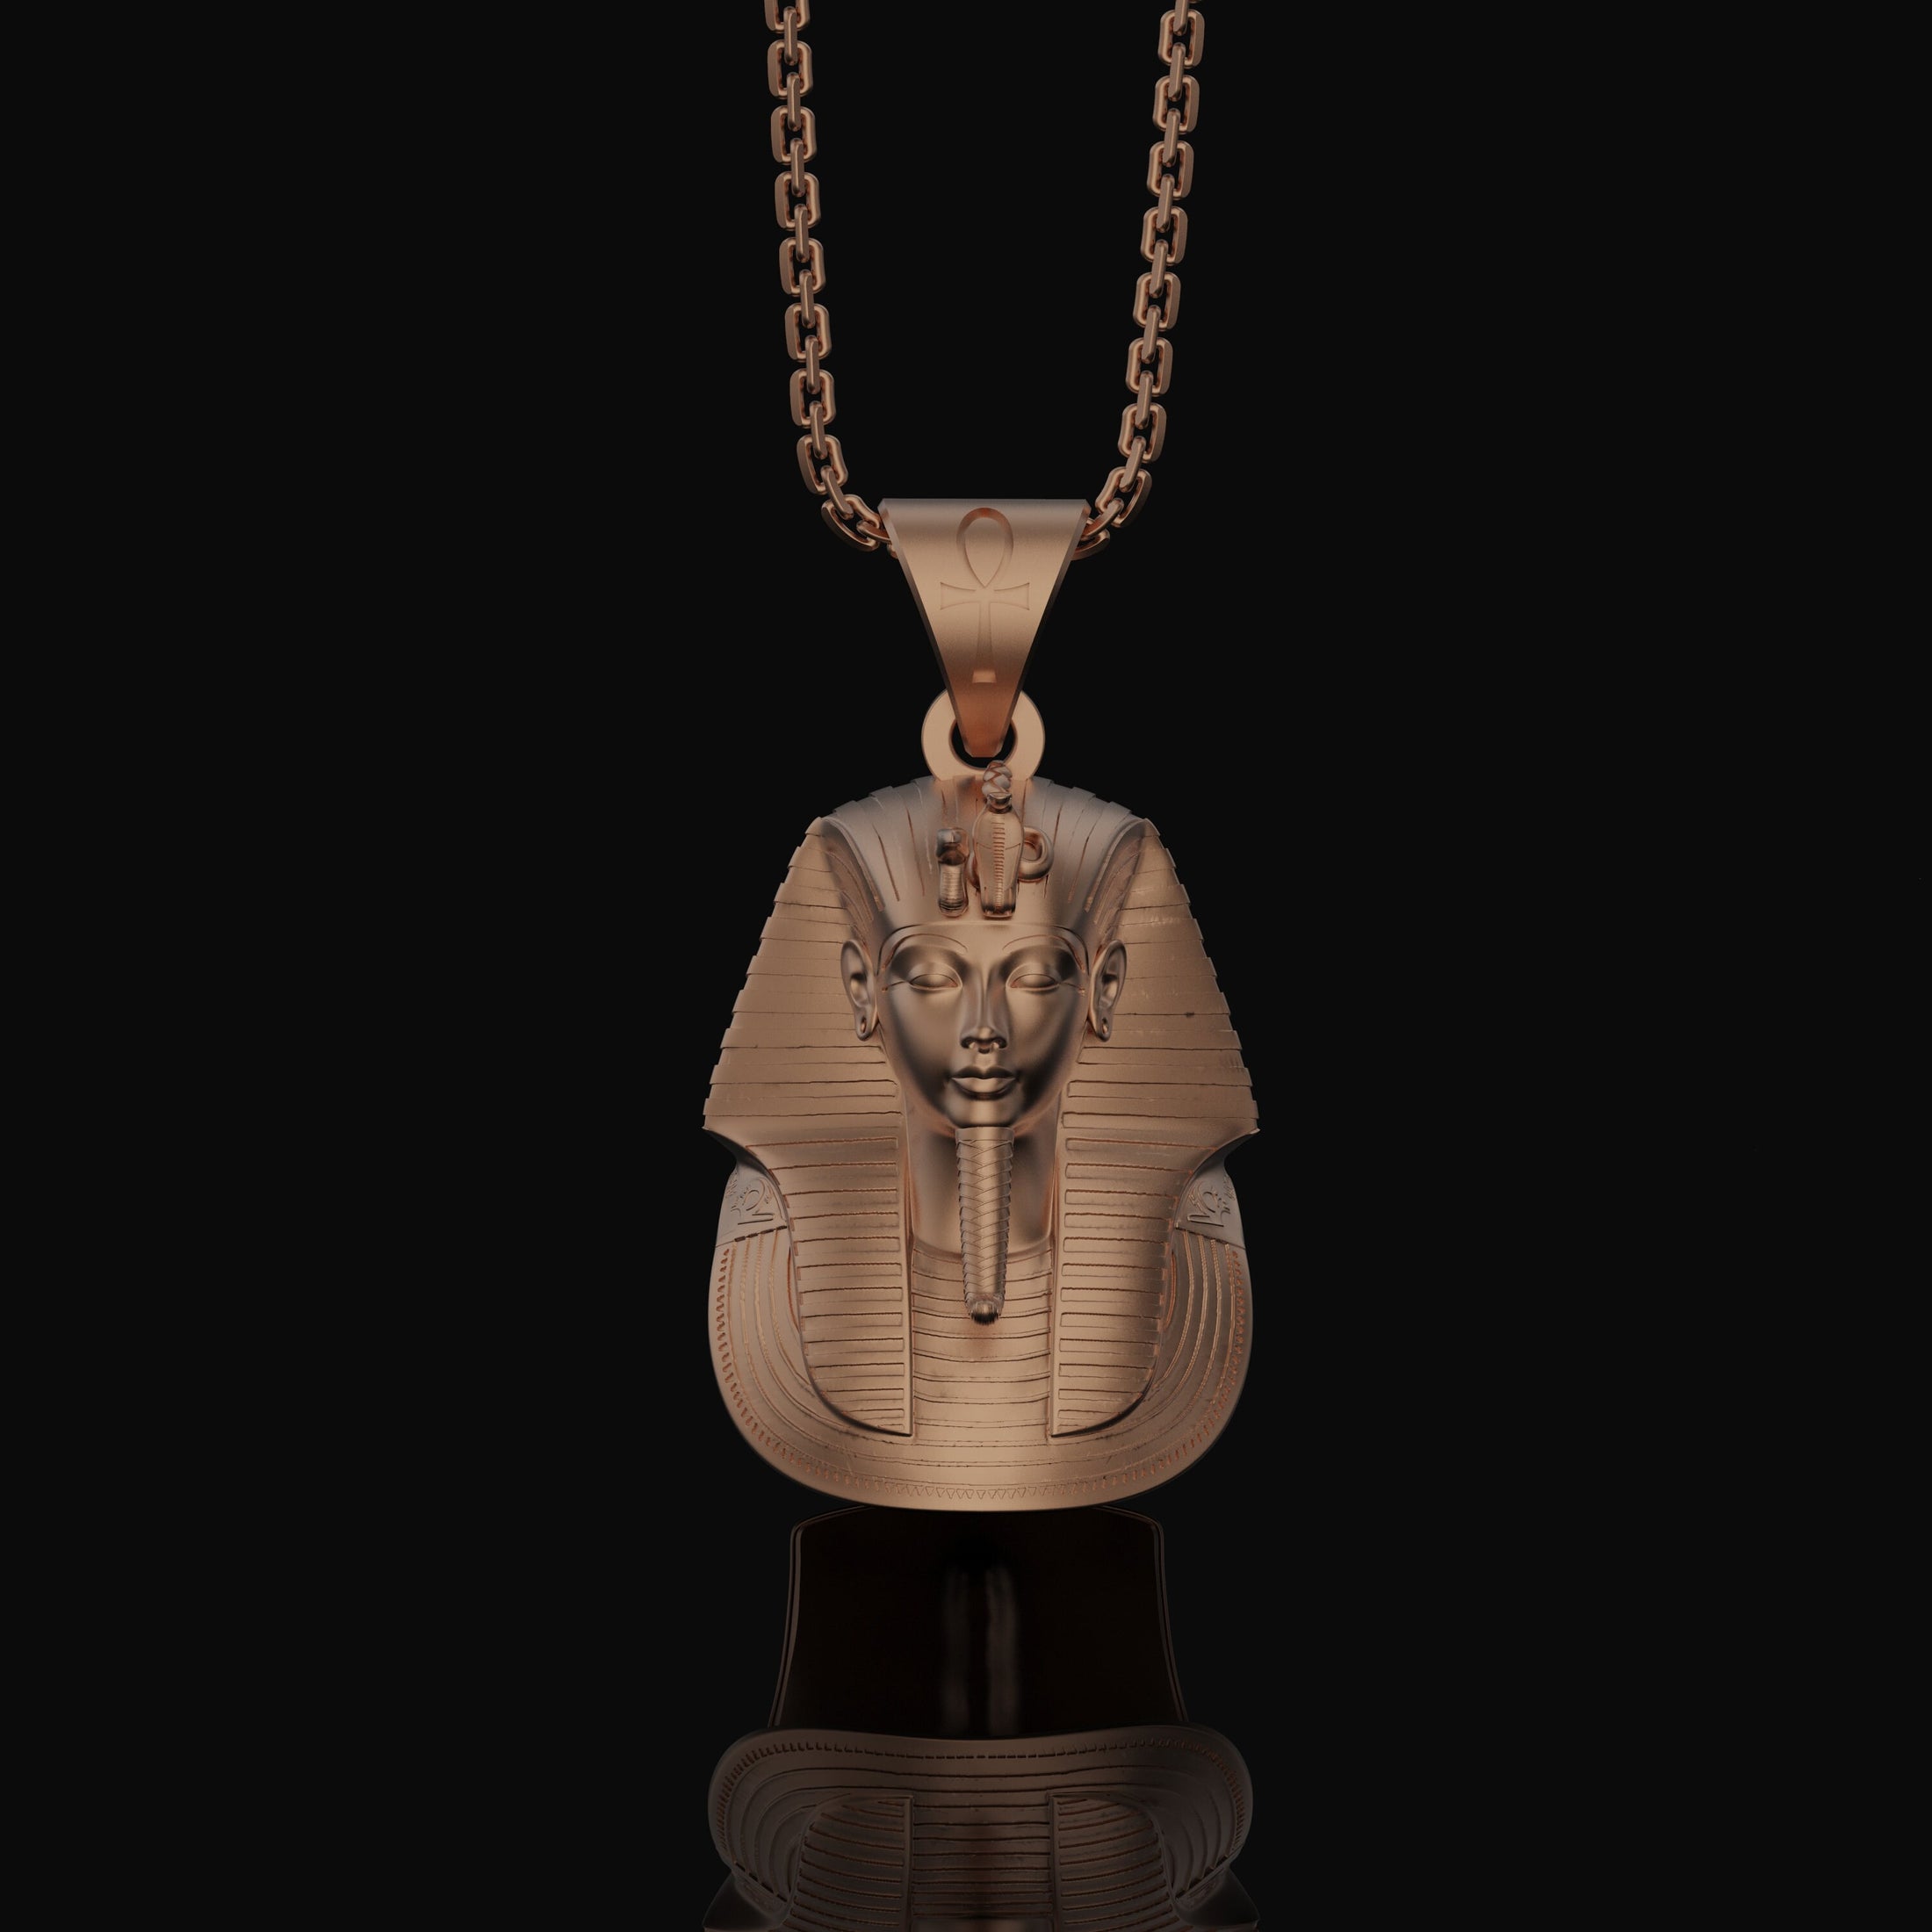 Silver Tutankhamun Pendant - Egyptian King Necklace, Pharaoh Tutankhamun Jewelry, Historical Artifact